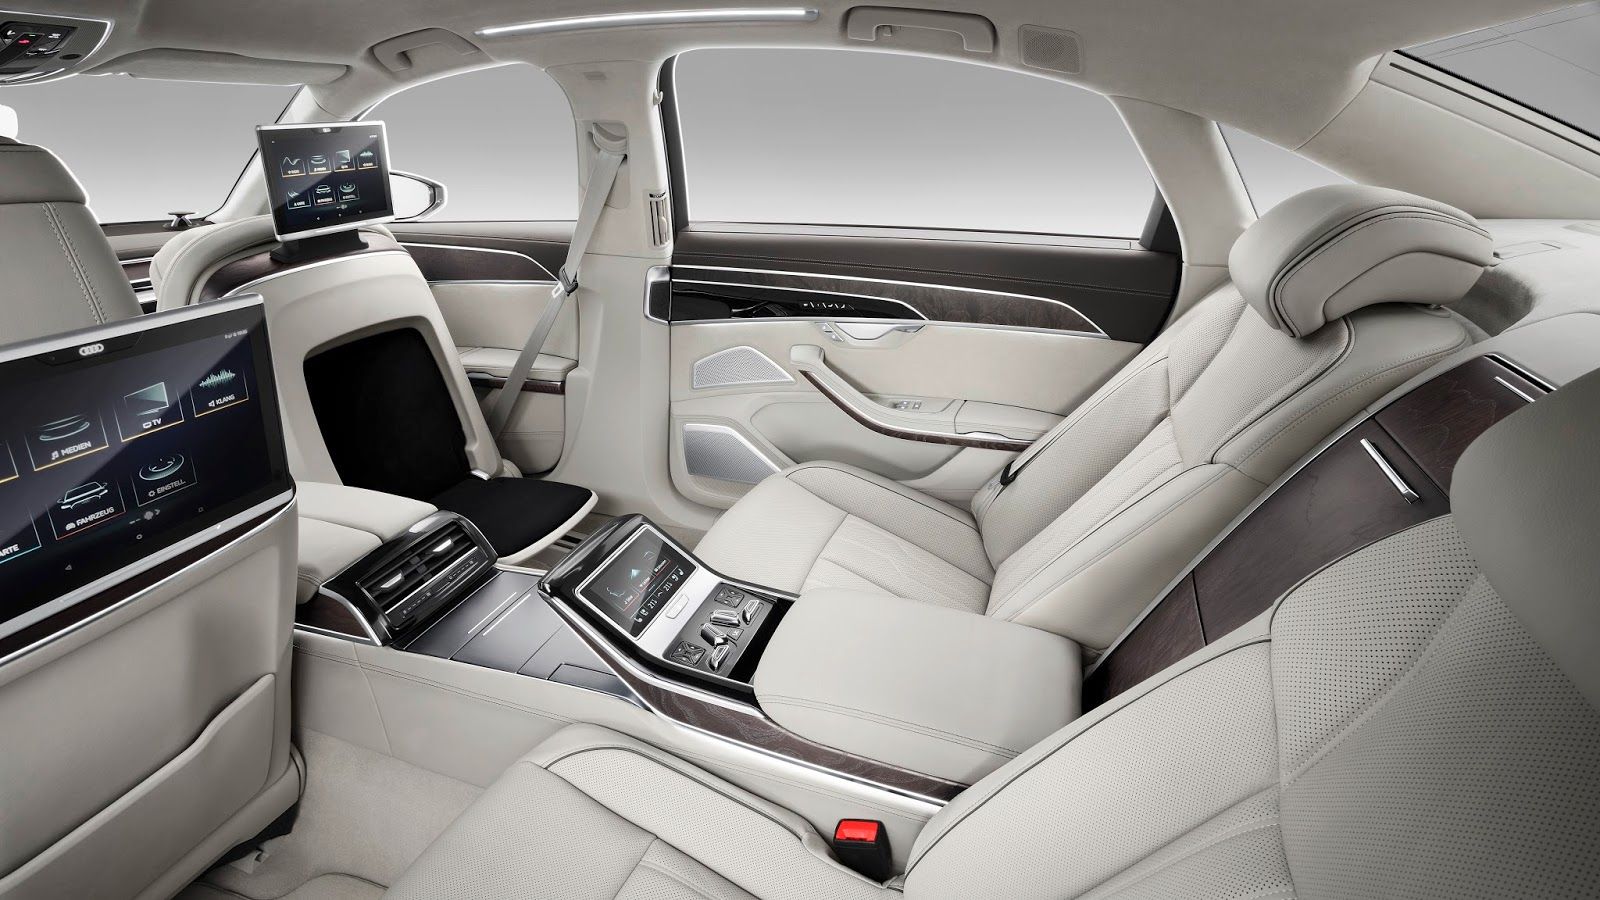 https://static1.hotcarsimages.com/wordpress/wp-content/uploads/2021/10/Audi-A8-L-luxury-back-seat-footrest.jpg